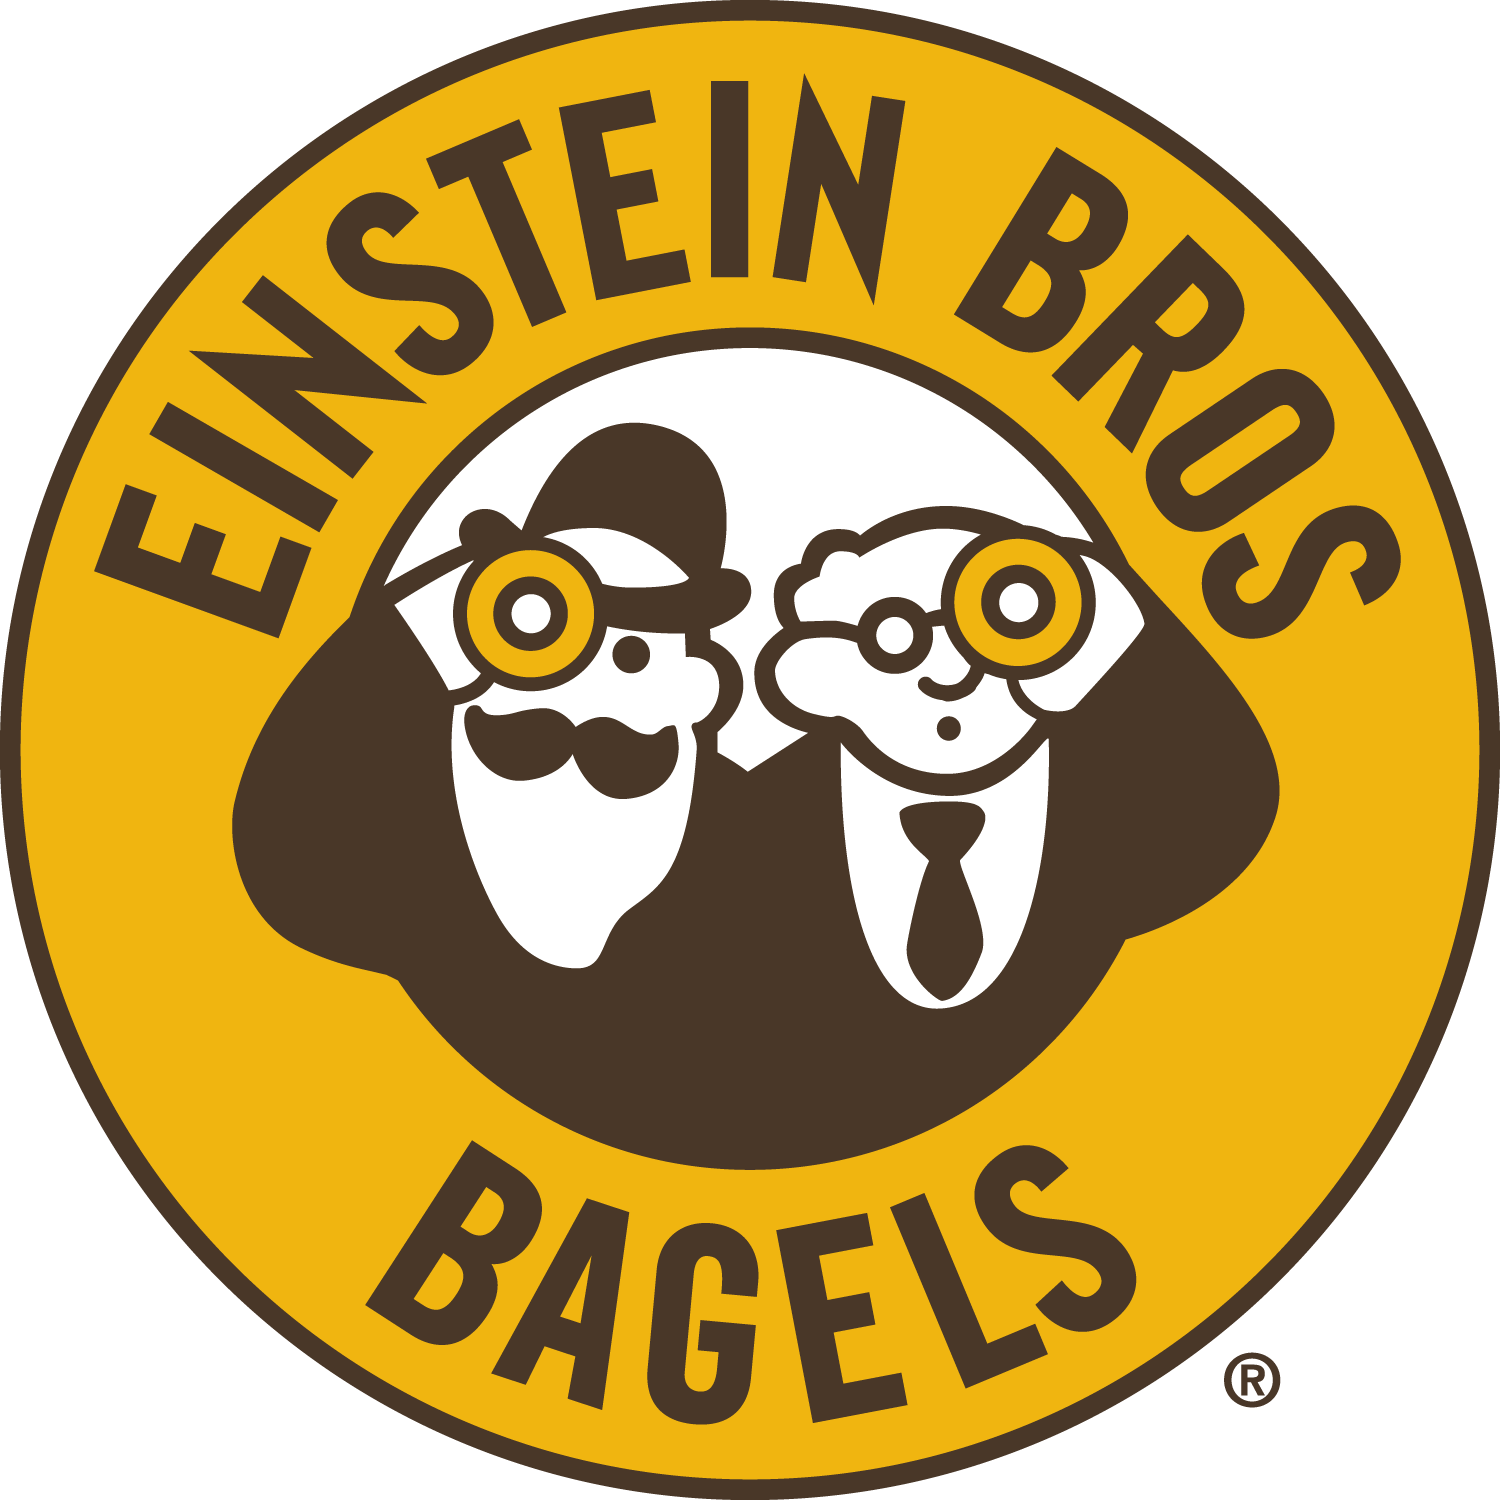 Bagels Texas Tech University Ba - Einstein Bros Bagels (1500x1500), Png Download